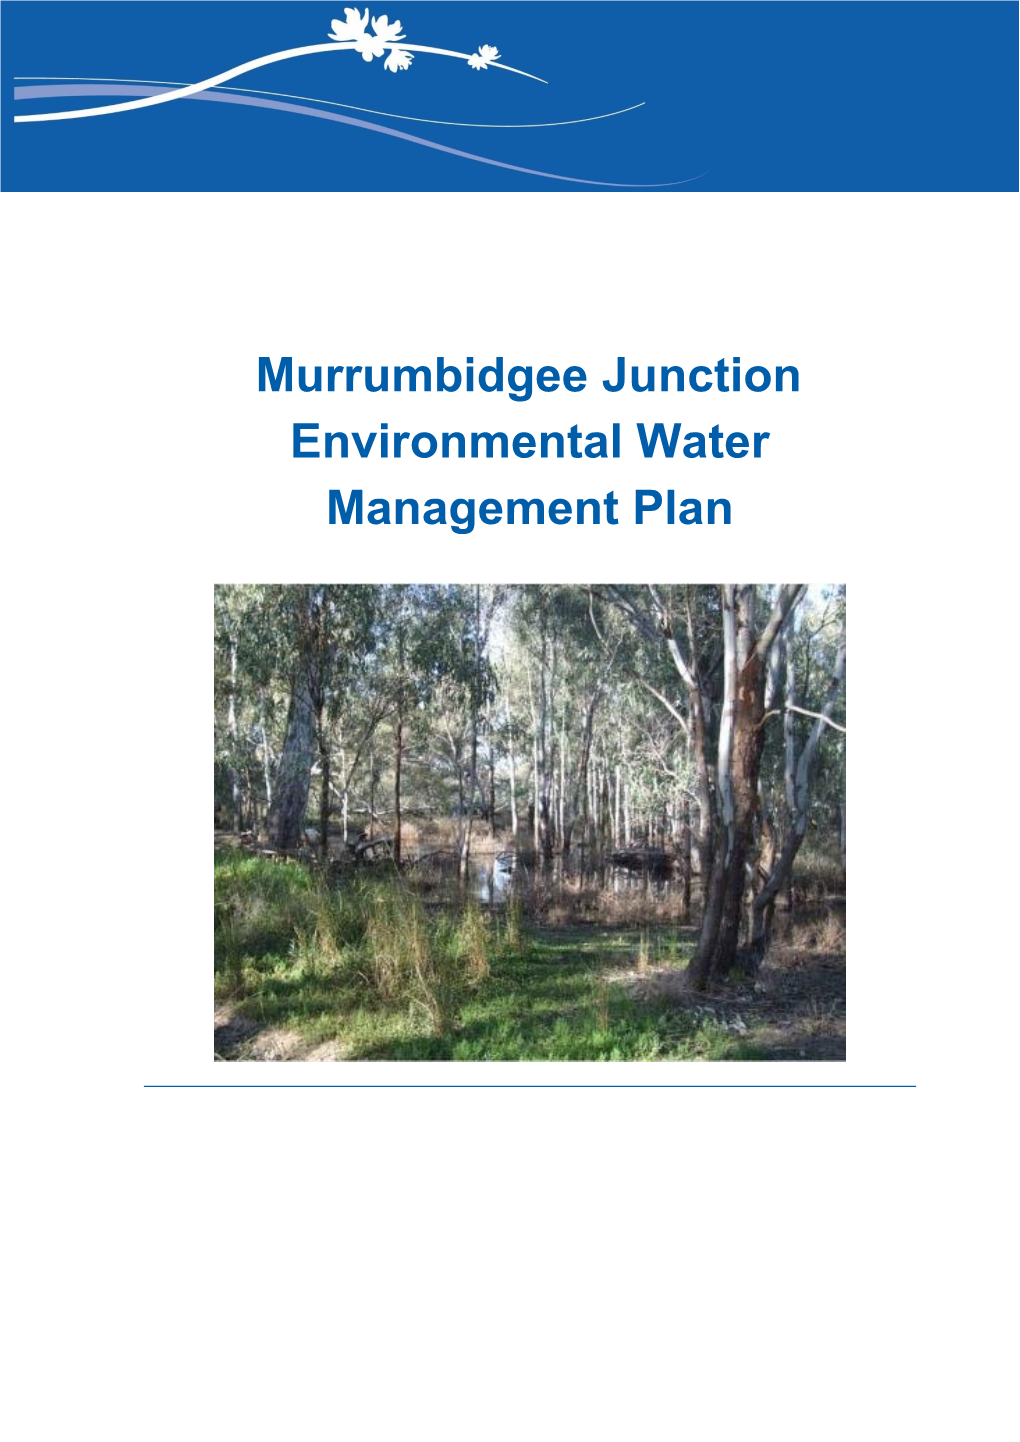 Murrumbidgee Junction Environmental Water Management Plan